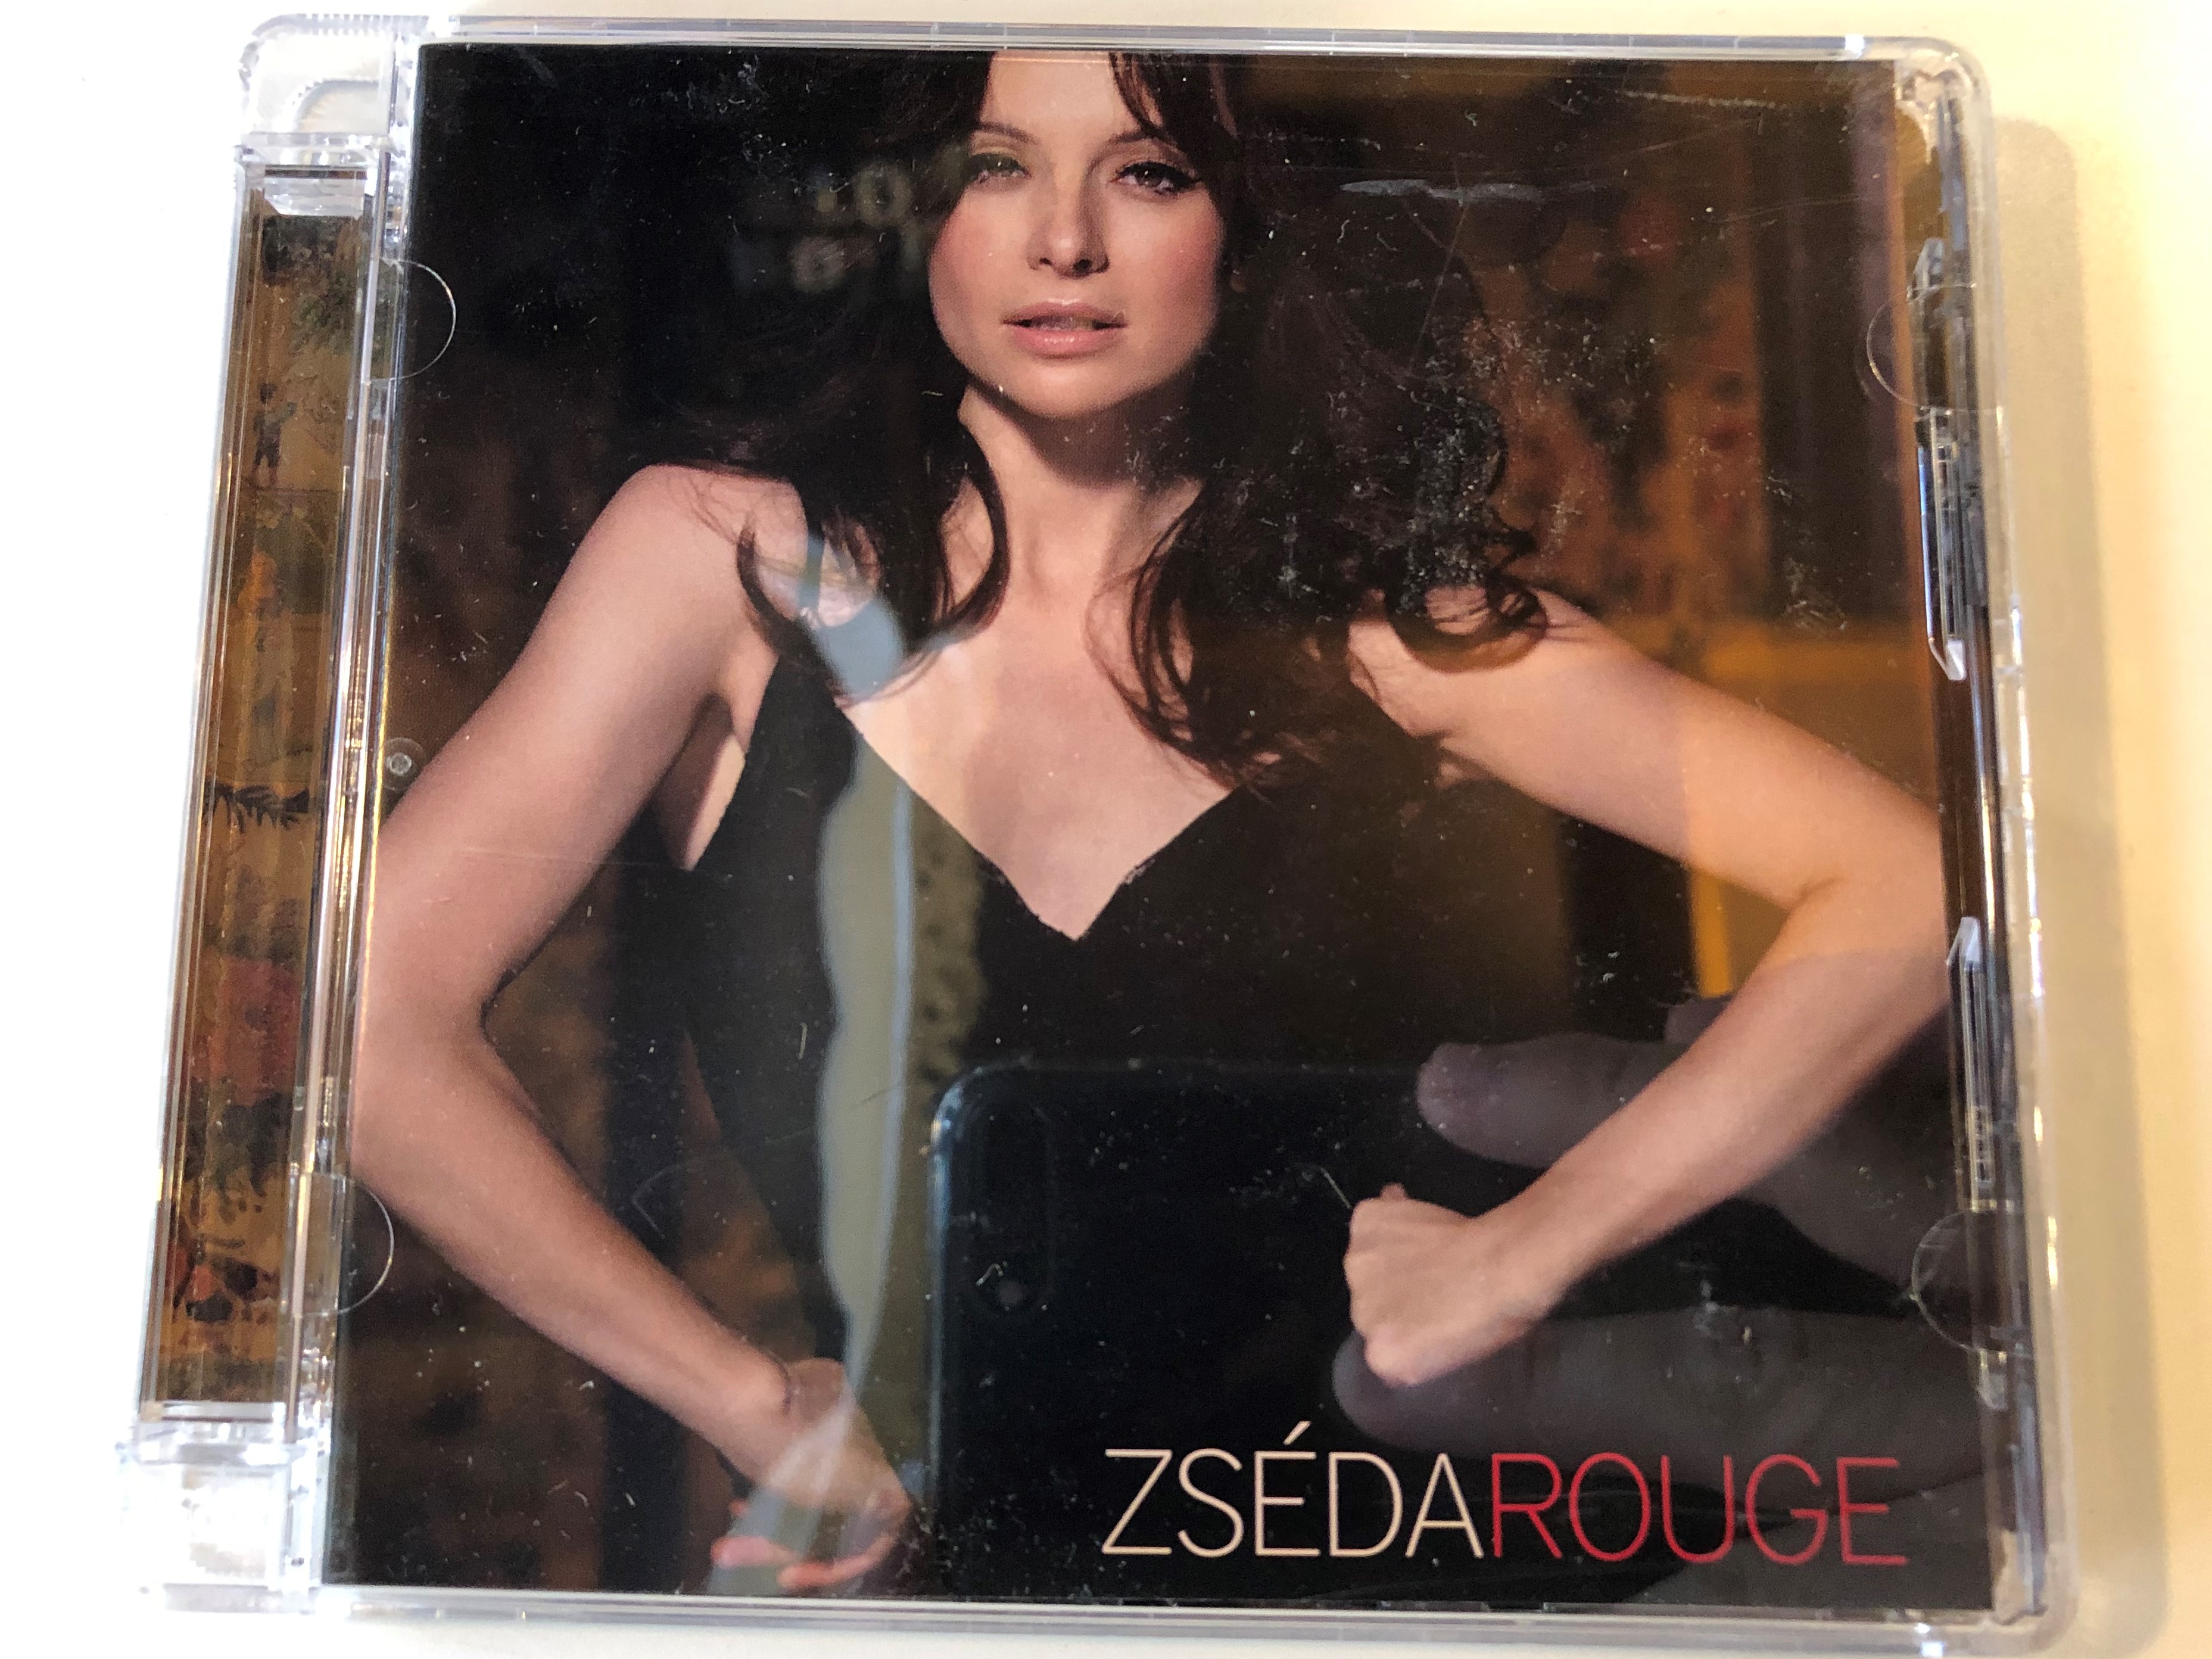 zs-da-rouge-magneoton-audio-cd-2008-5186-51724-2-1-.jpg